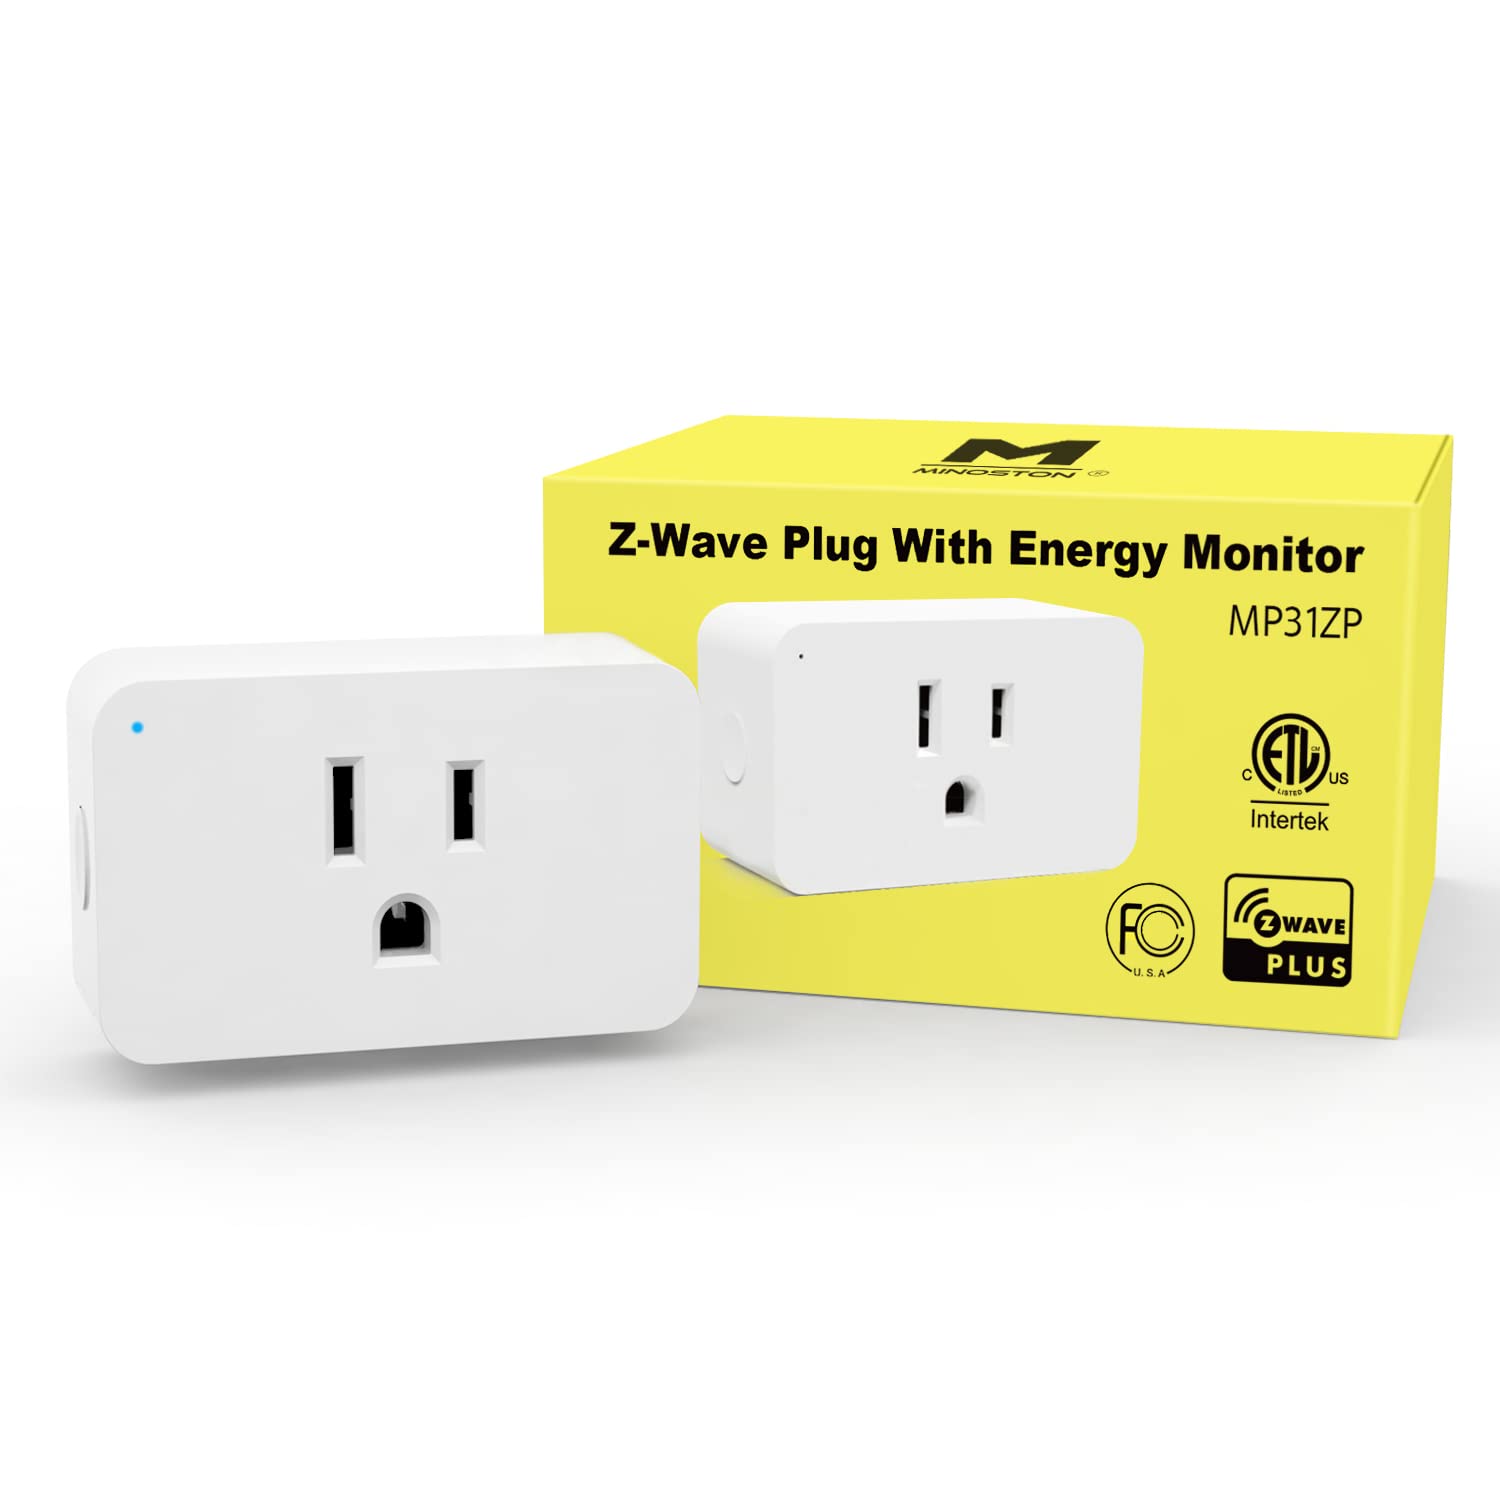 Minoston Z-Wave Plus Outlet, Mini Plug in Socket, 15A, Z-Wave Hub, MP21Z